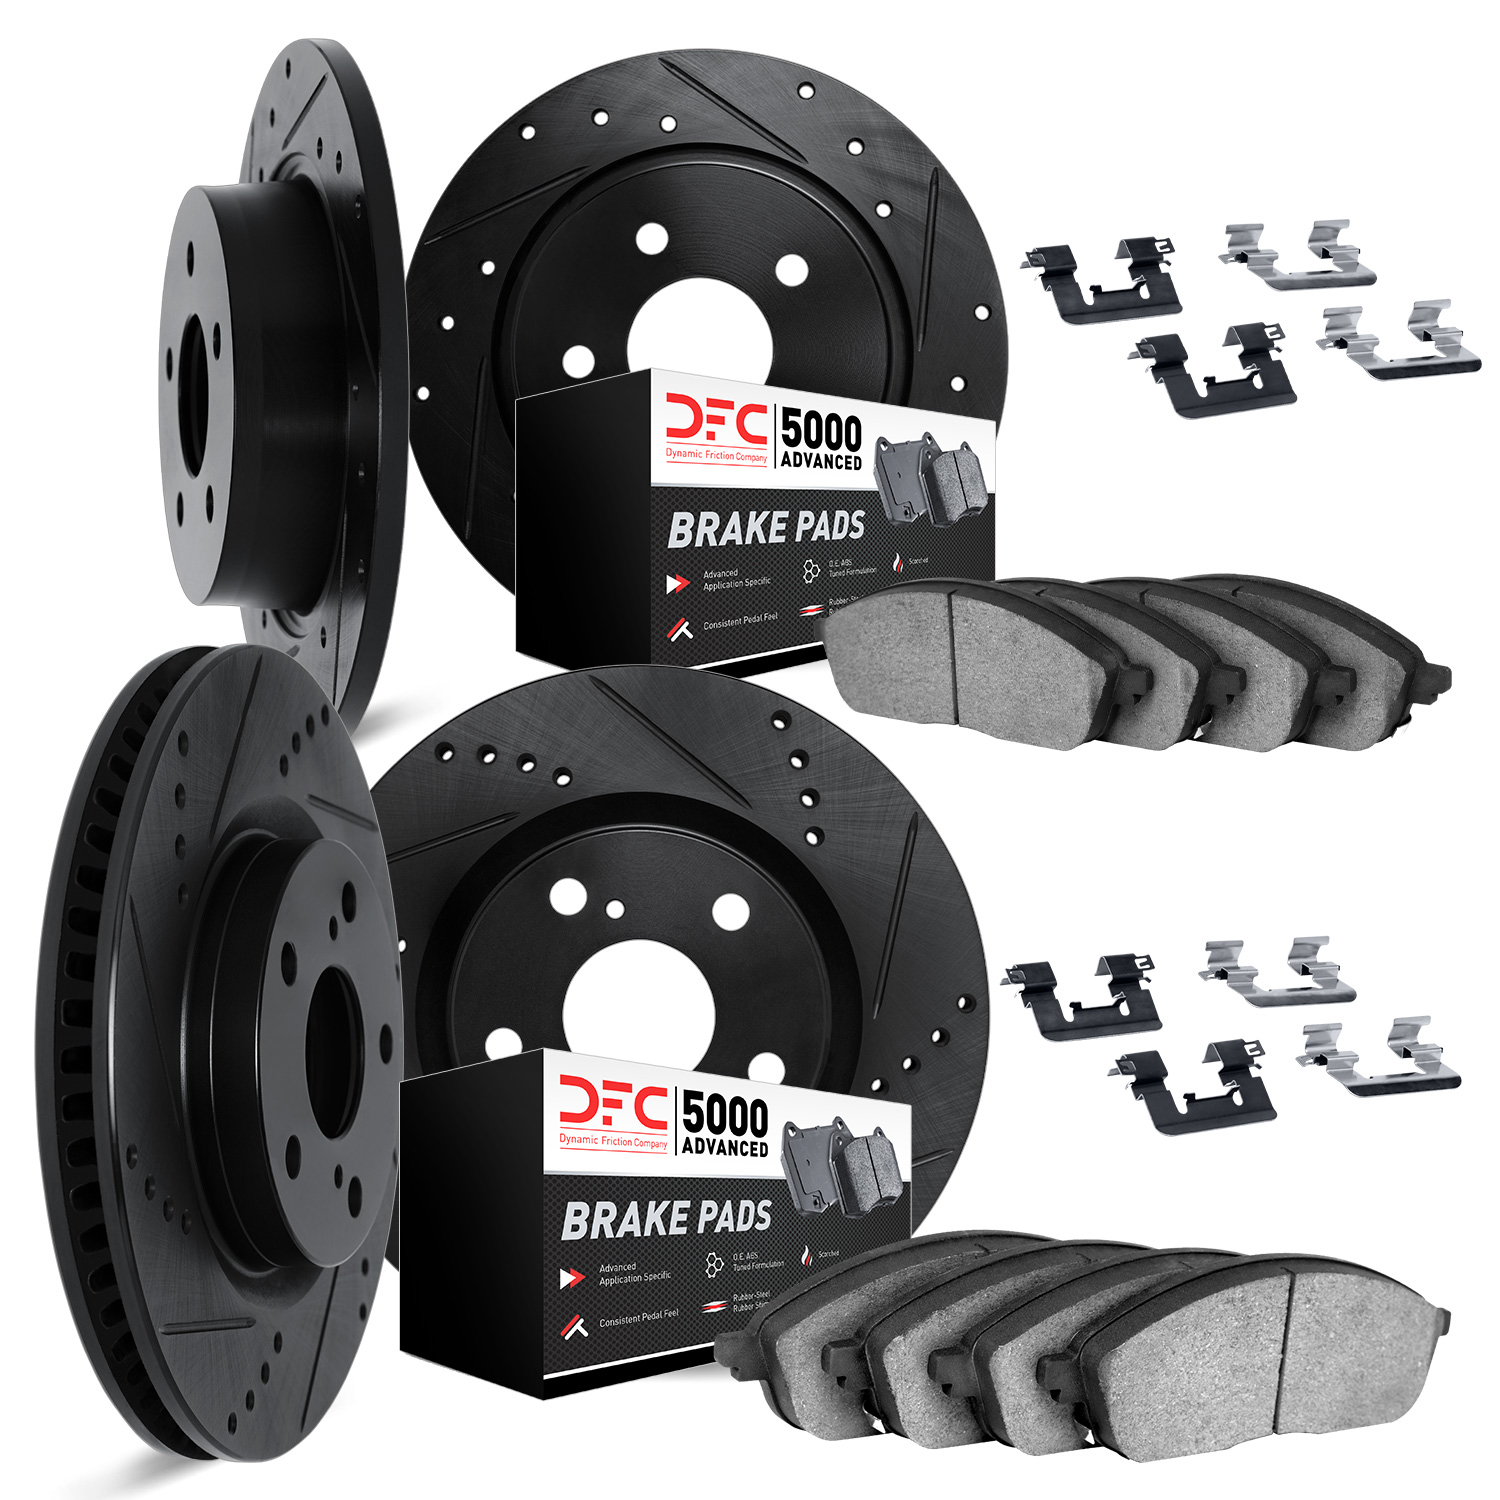 8514-42001 Drilled/Slotted Brake Rotors w/5000 Advanced Brake Pads Kit & Hardware [Black], 1993-1993 Mopar, Position: Front and